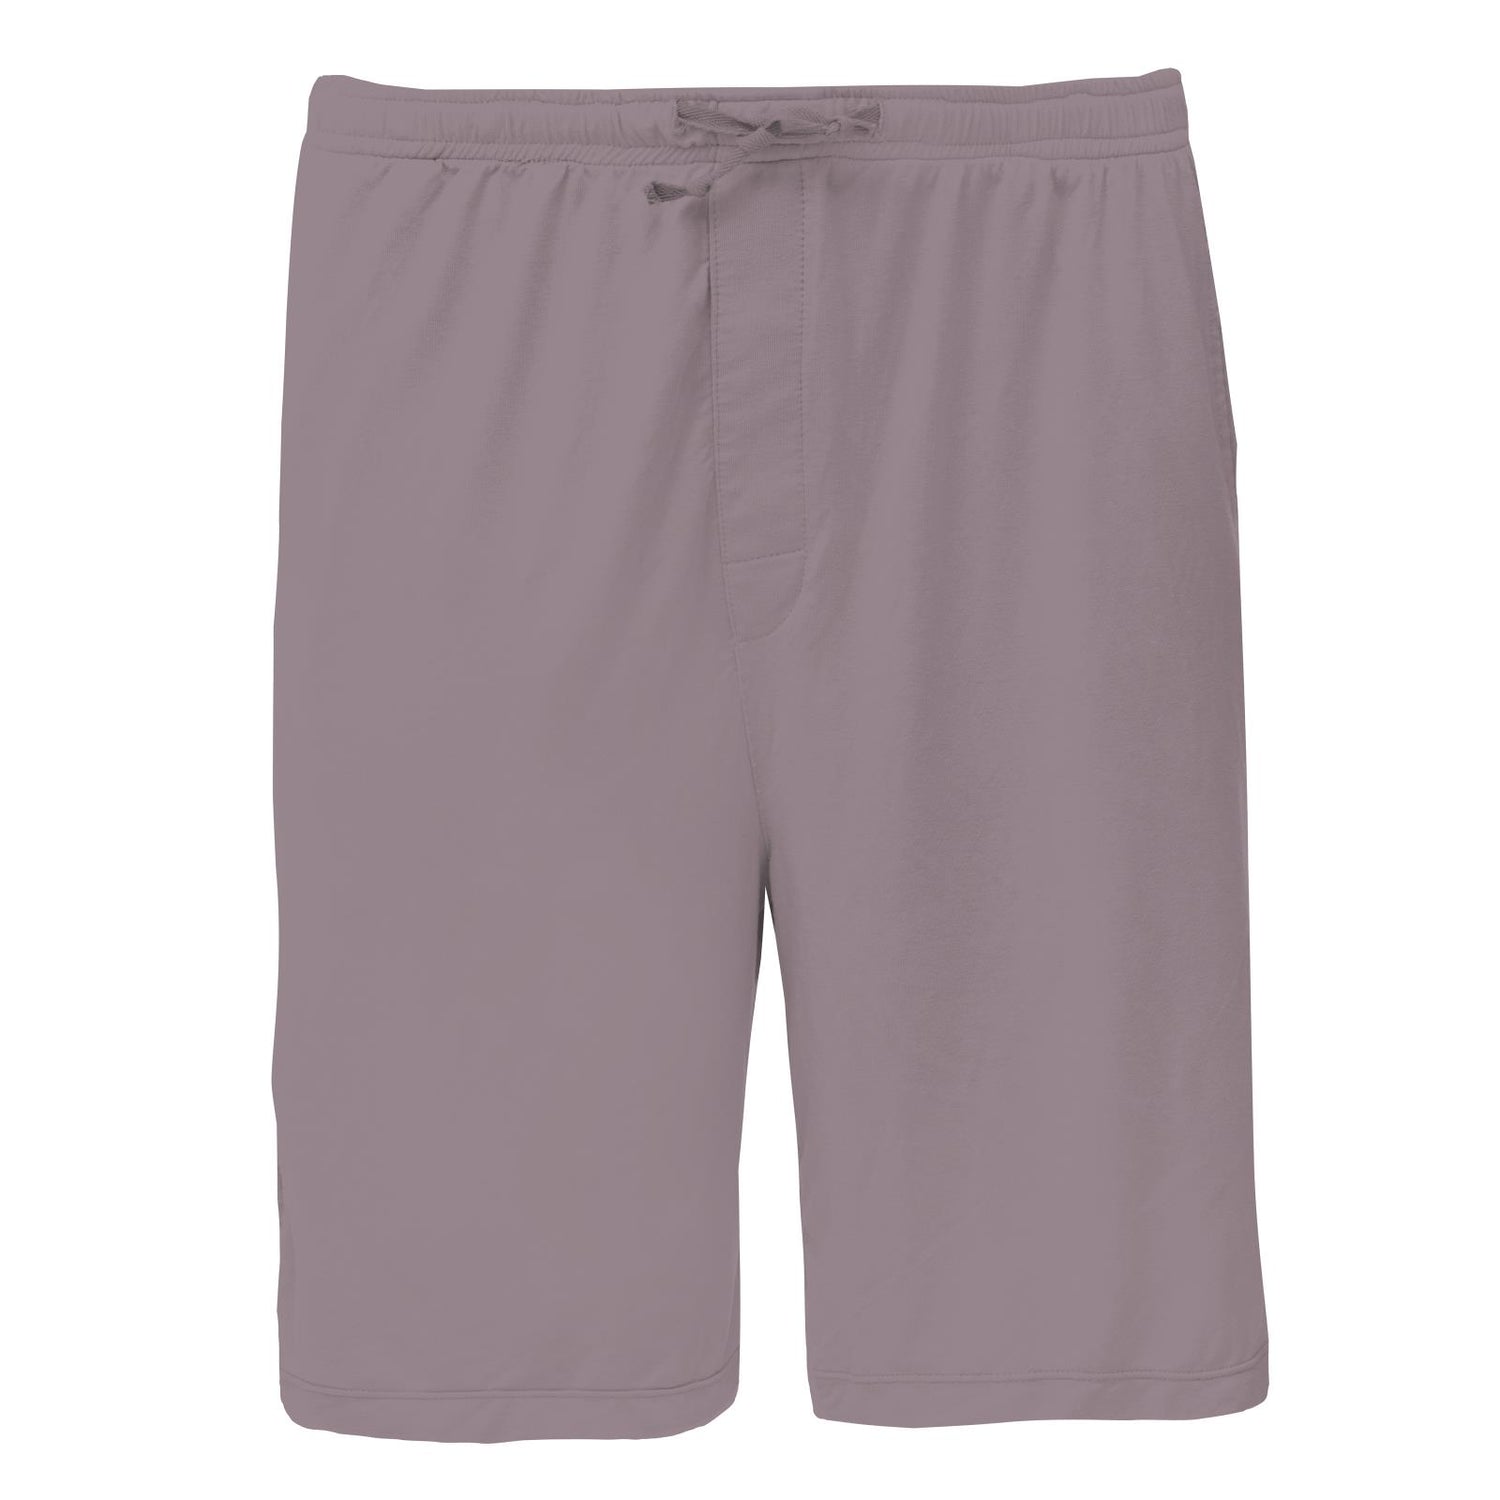 Men's Lounge Shorts in Quail